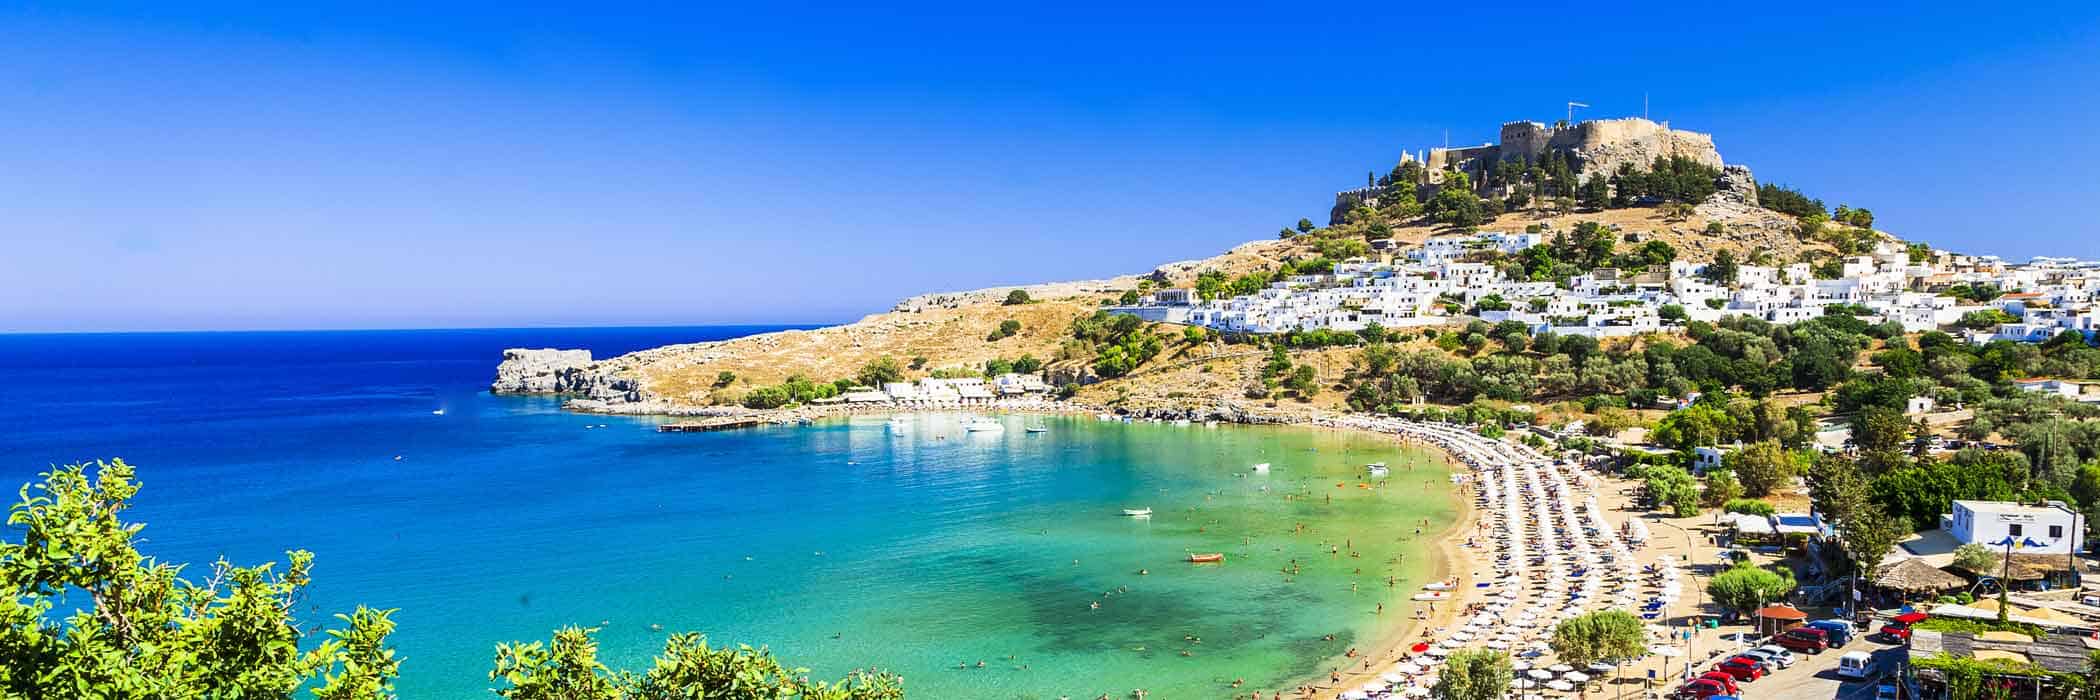 Villa Holidays To Greece